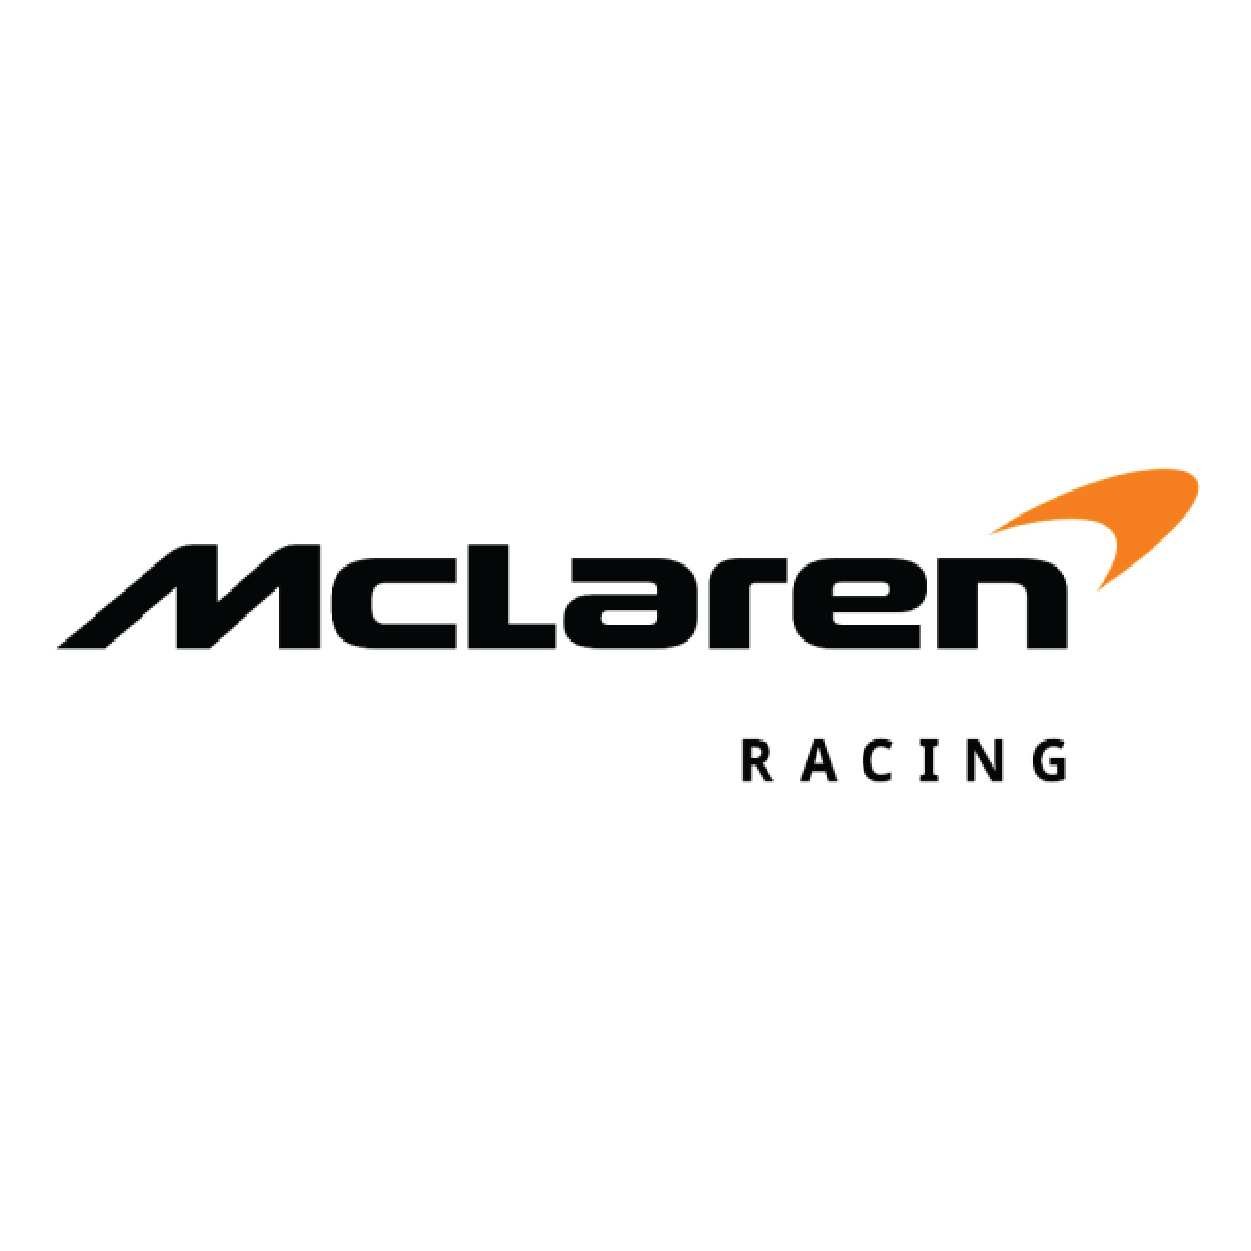 Mclaren racing logo